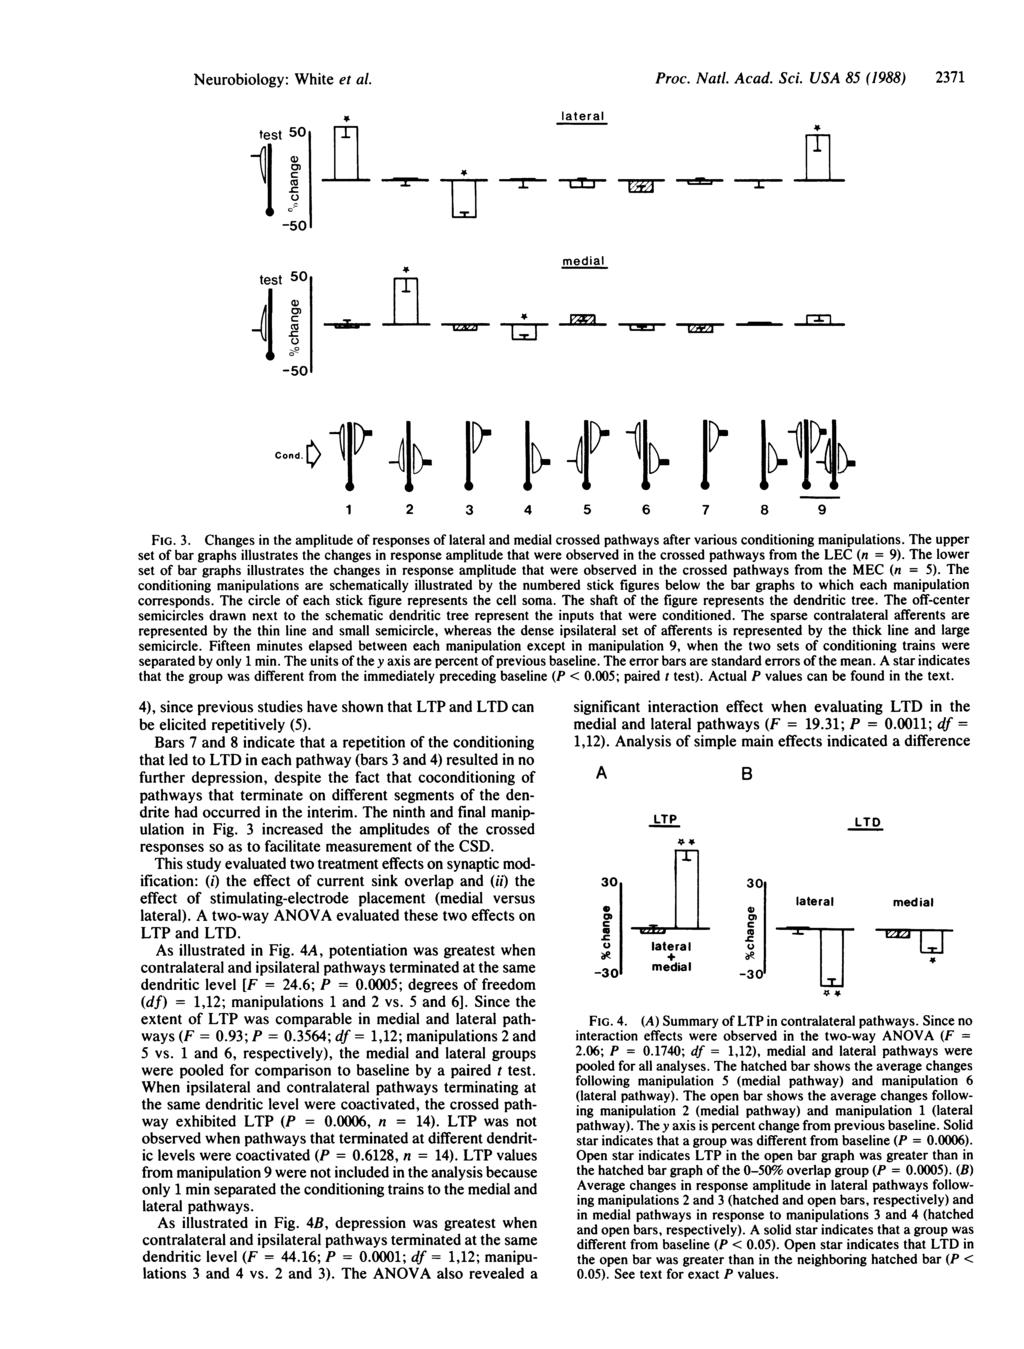 Neurobiology: White et al. test 50 T a C.).L lateral Proc. Natl. Acad. Sci. USA 85 (1988) 2371 _~-- -+- -~- ' - -L-1 ' --:I 1-50 test 50 Al0) C -ri -50 AL Cofnd 1l j(j 4 s 1 2 3 